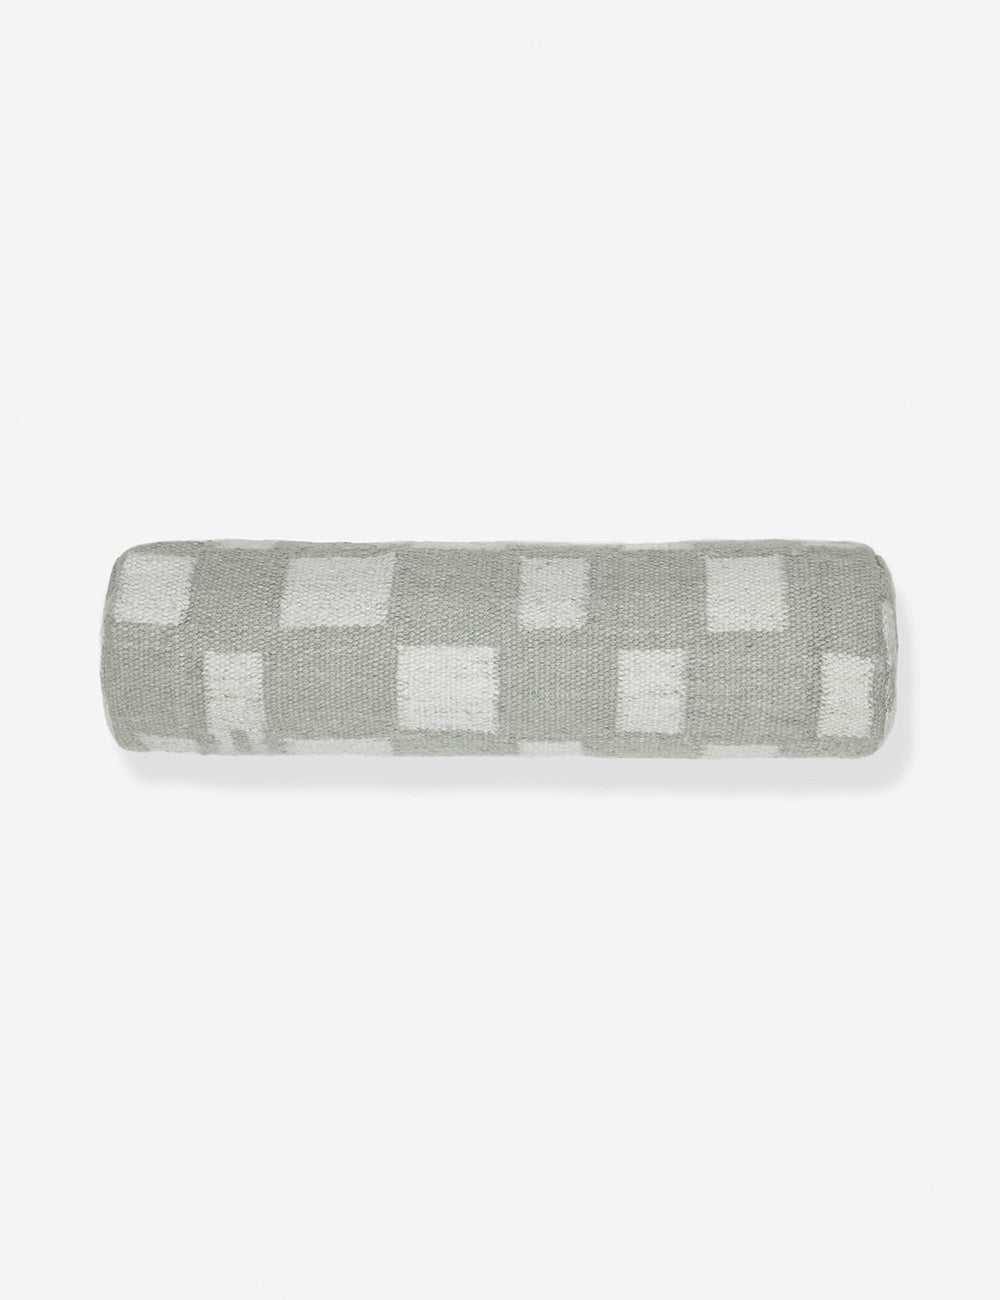 Irregular Checkerboard Bolster Pillow by Sarah Sherman Samuel - Image 0